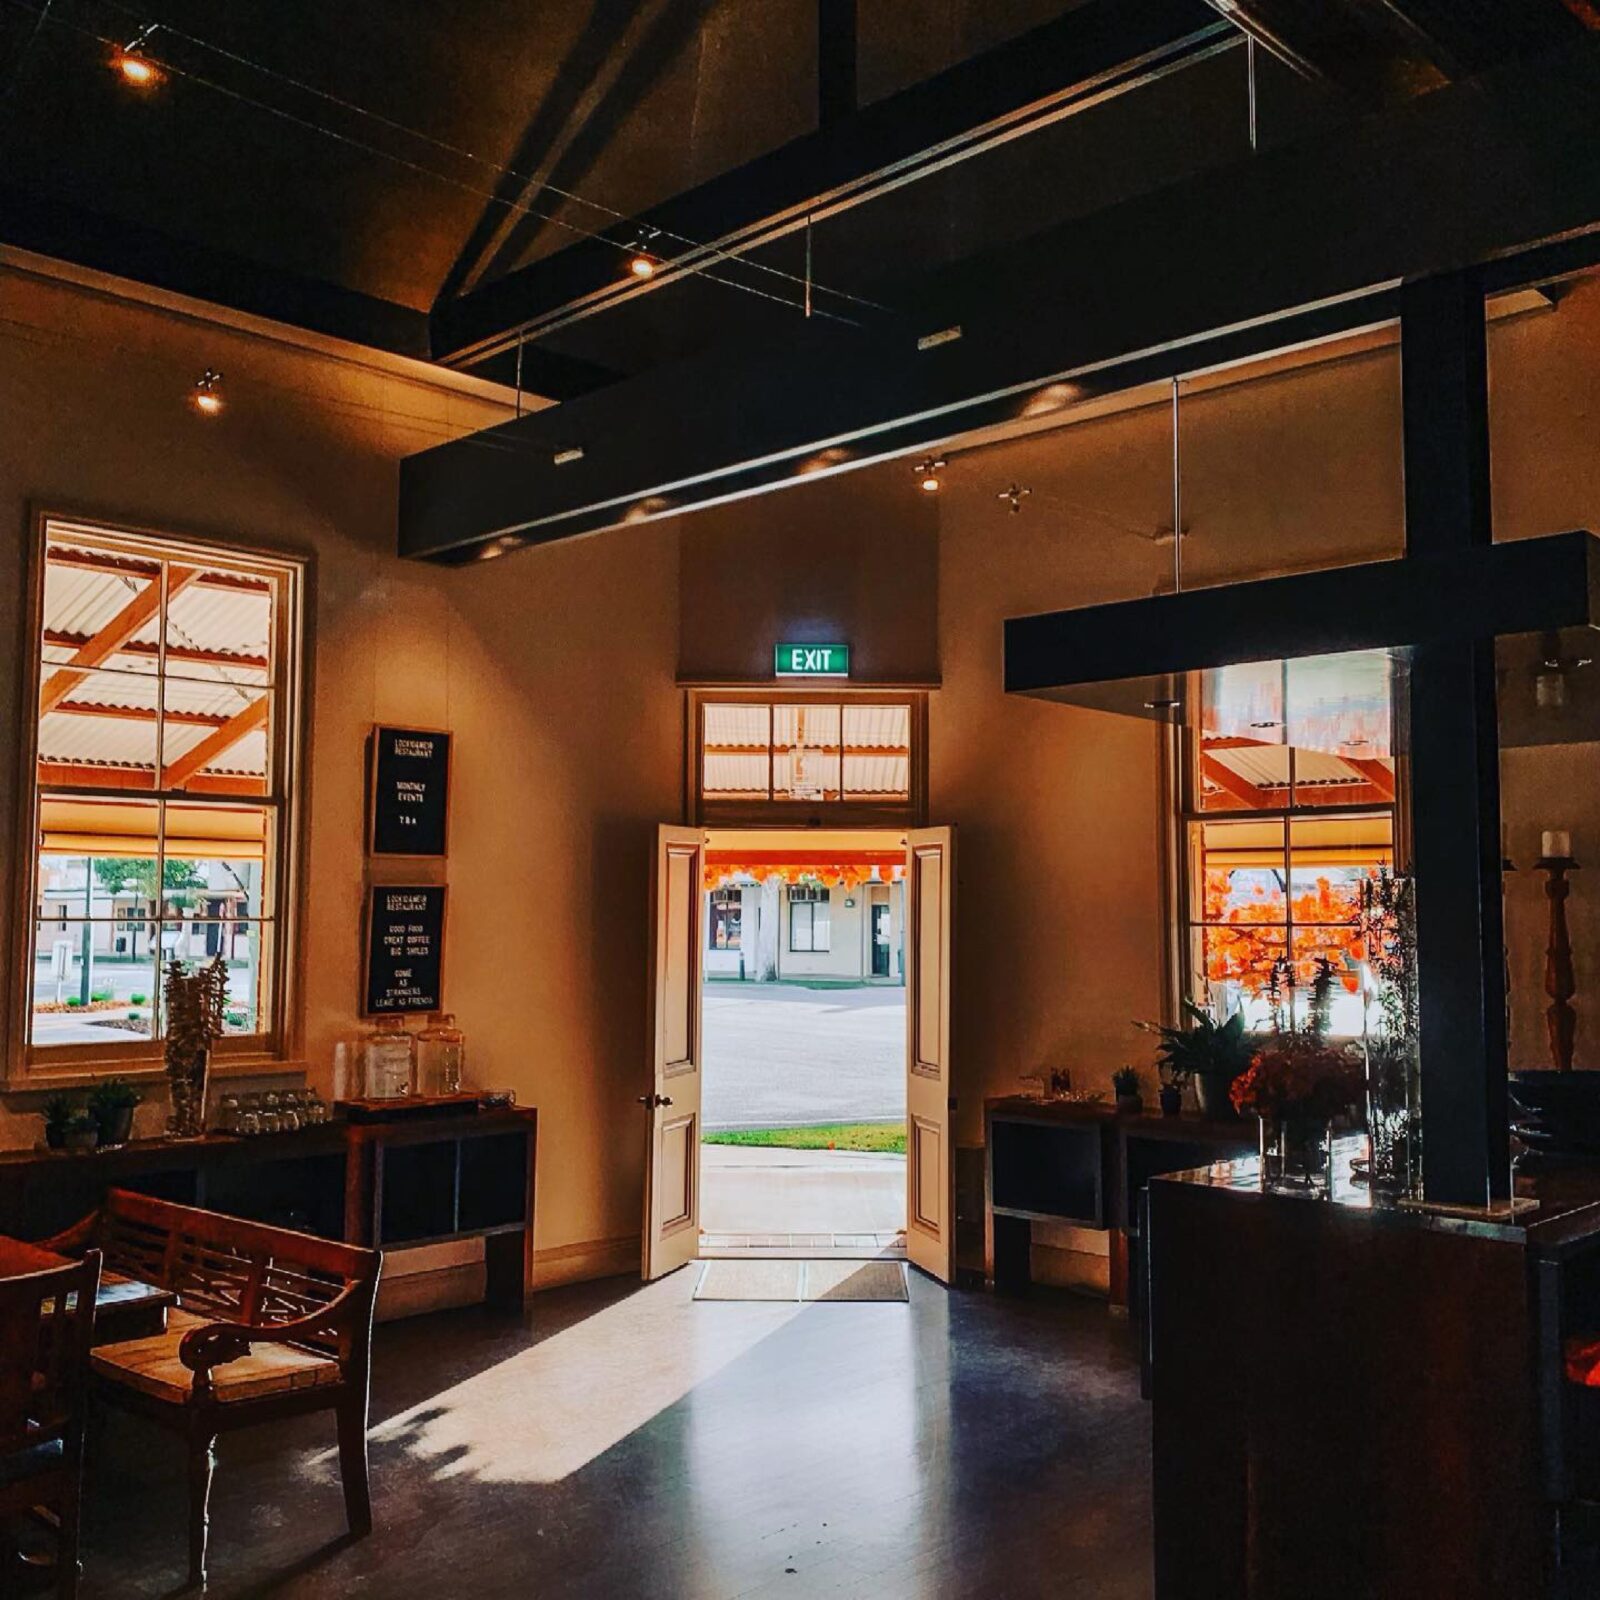 Cafe interior sun streaming through doors